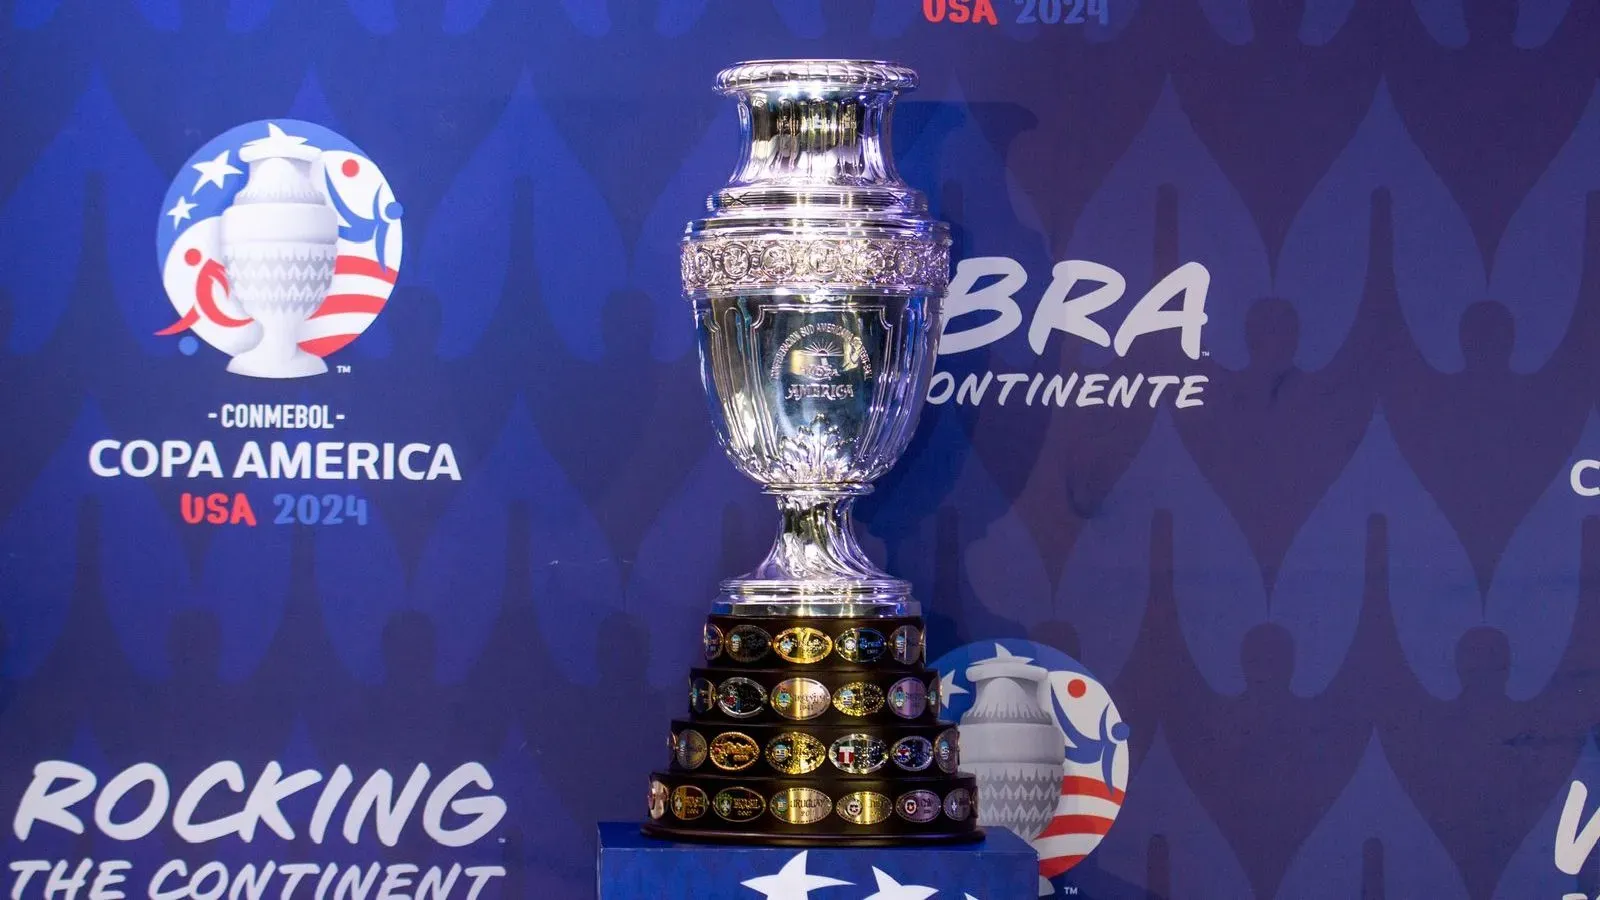 Trofeo de la Copa América USA 2024. (Foto: CONMEBOL web)